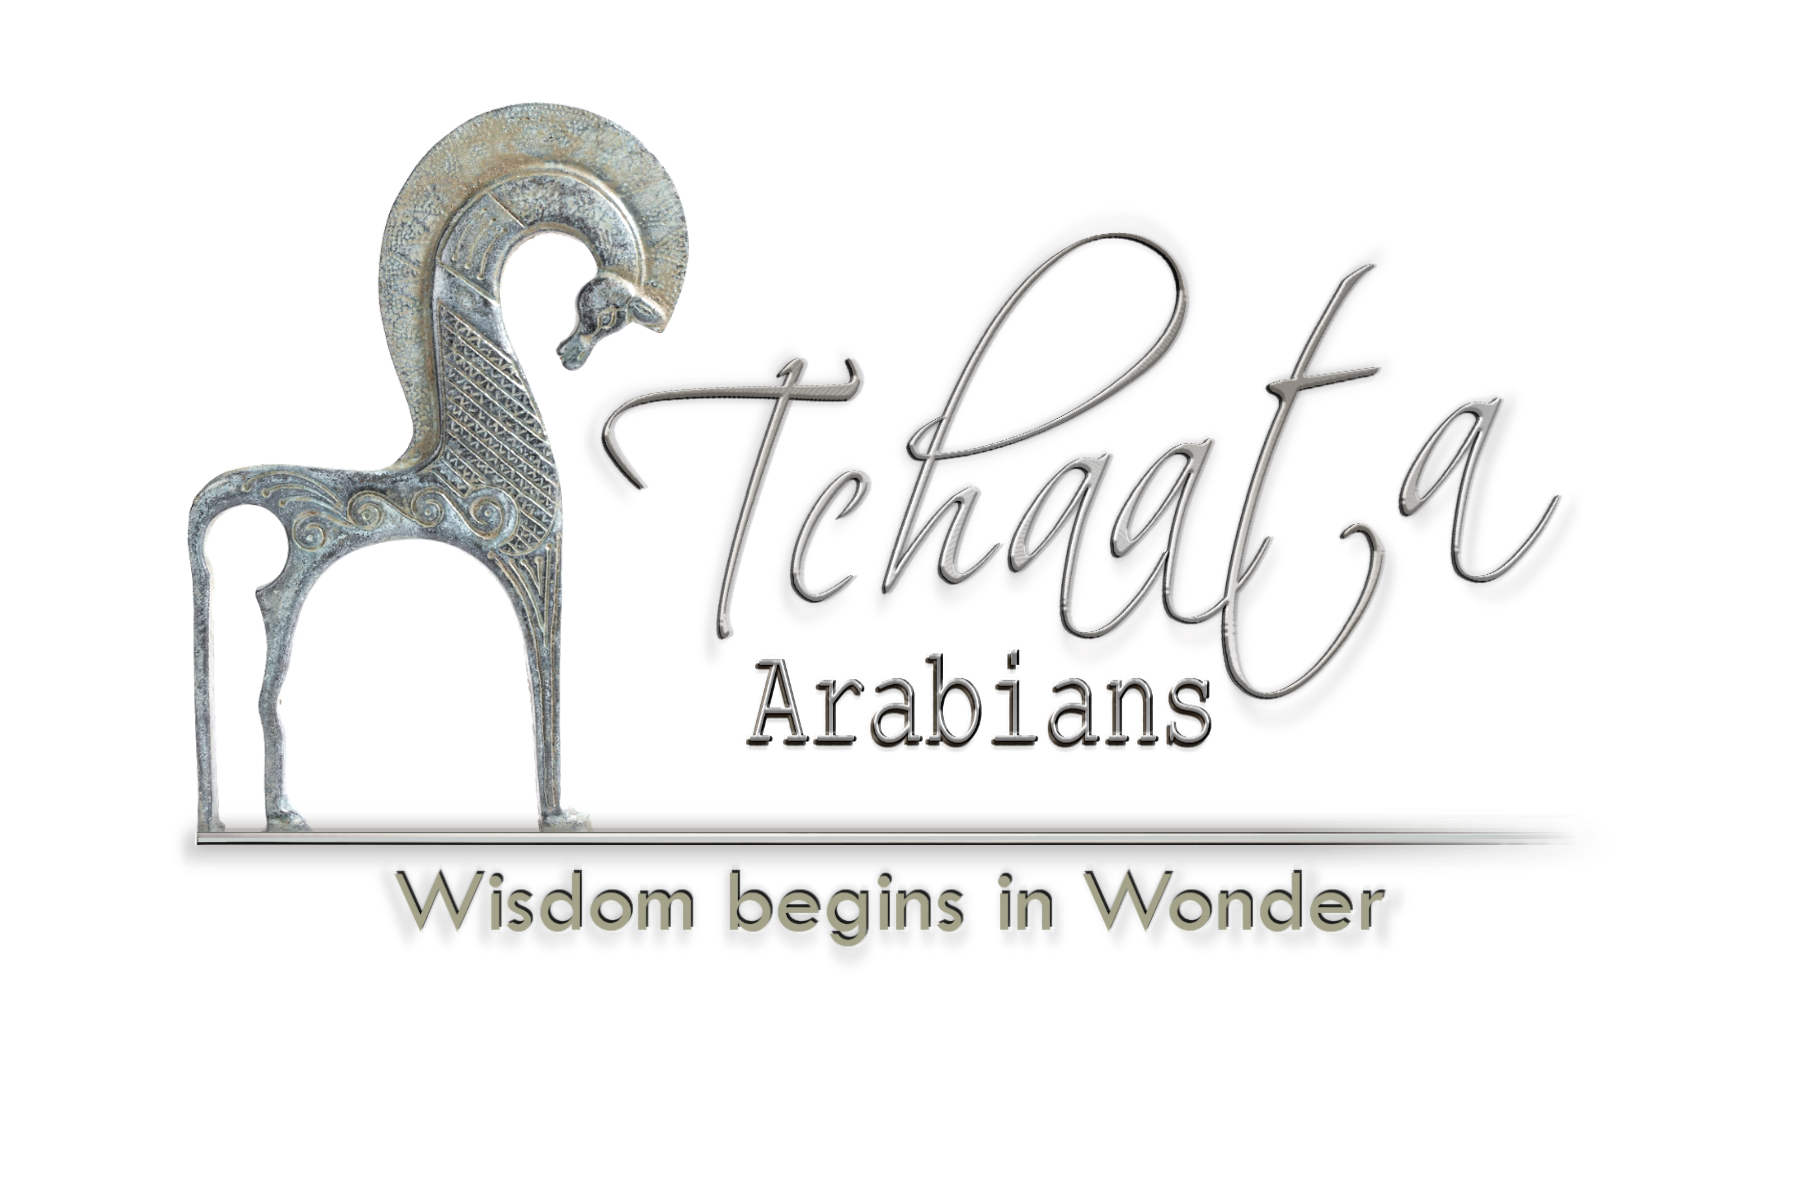 Tchaata Arabians